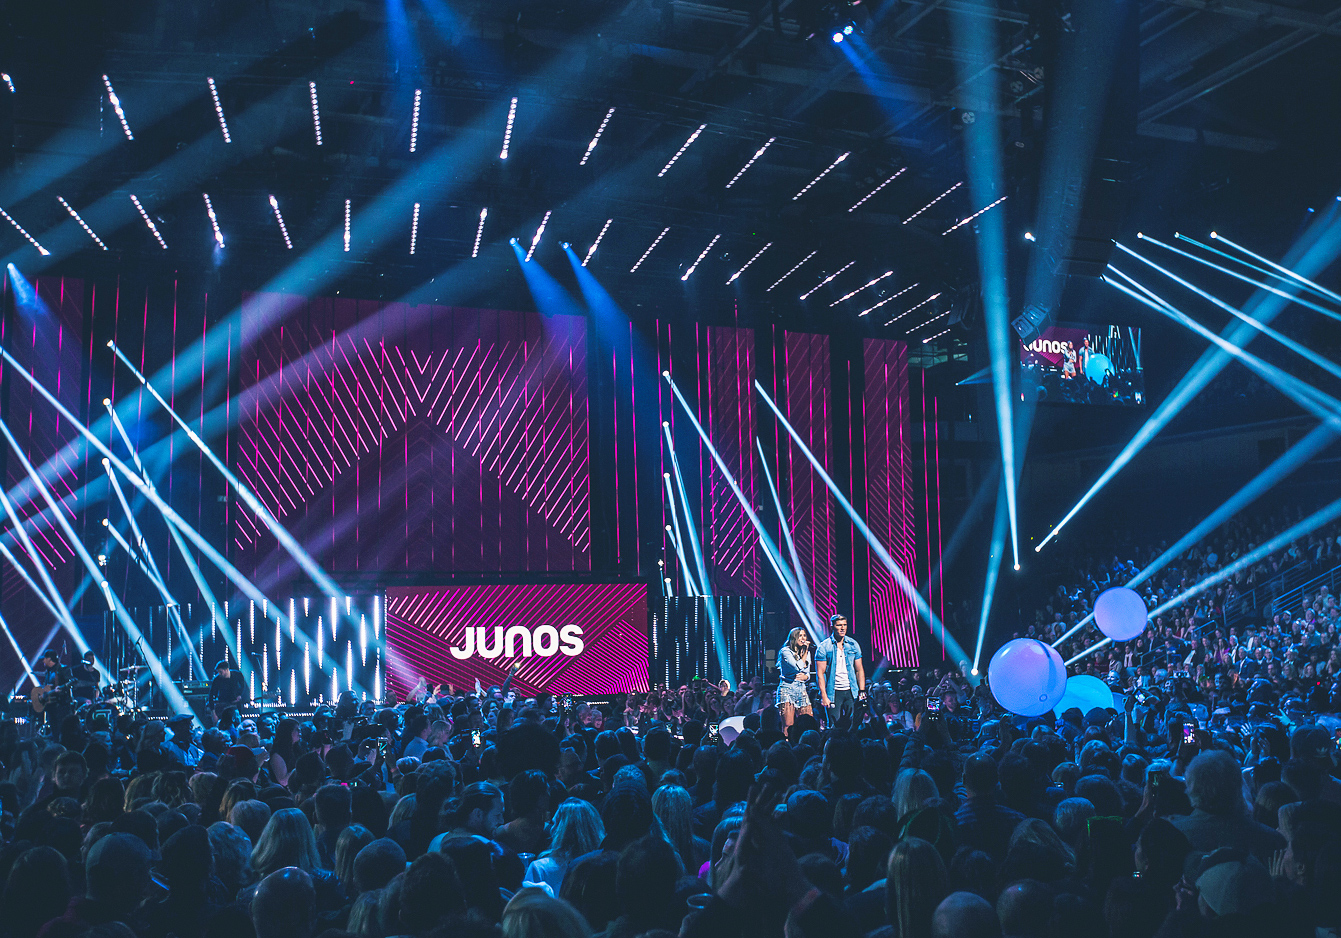 London Juno awards audience next to stage